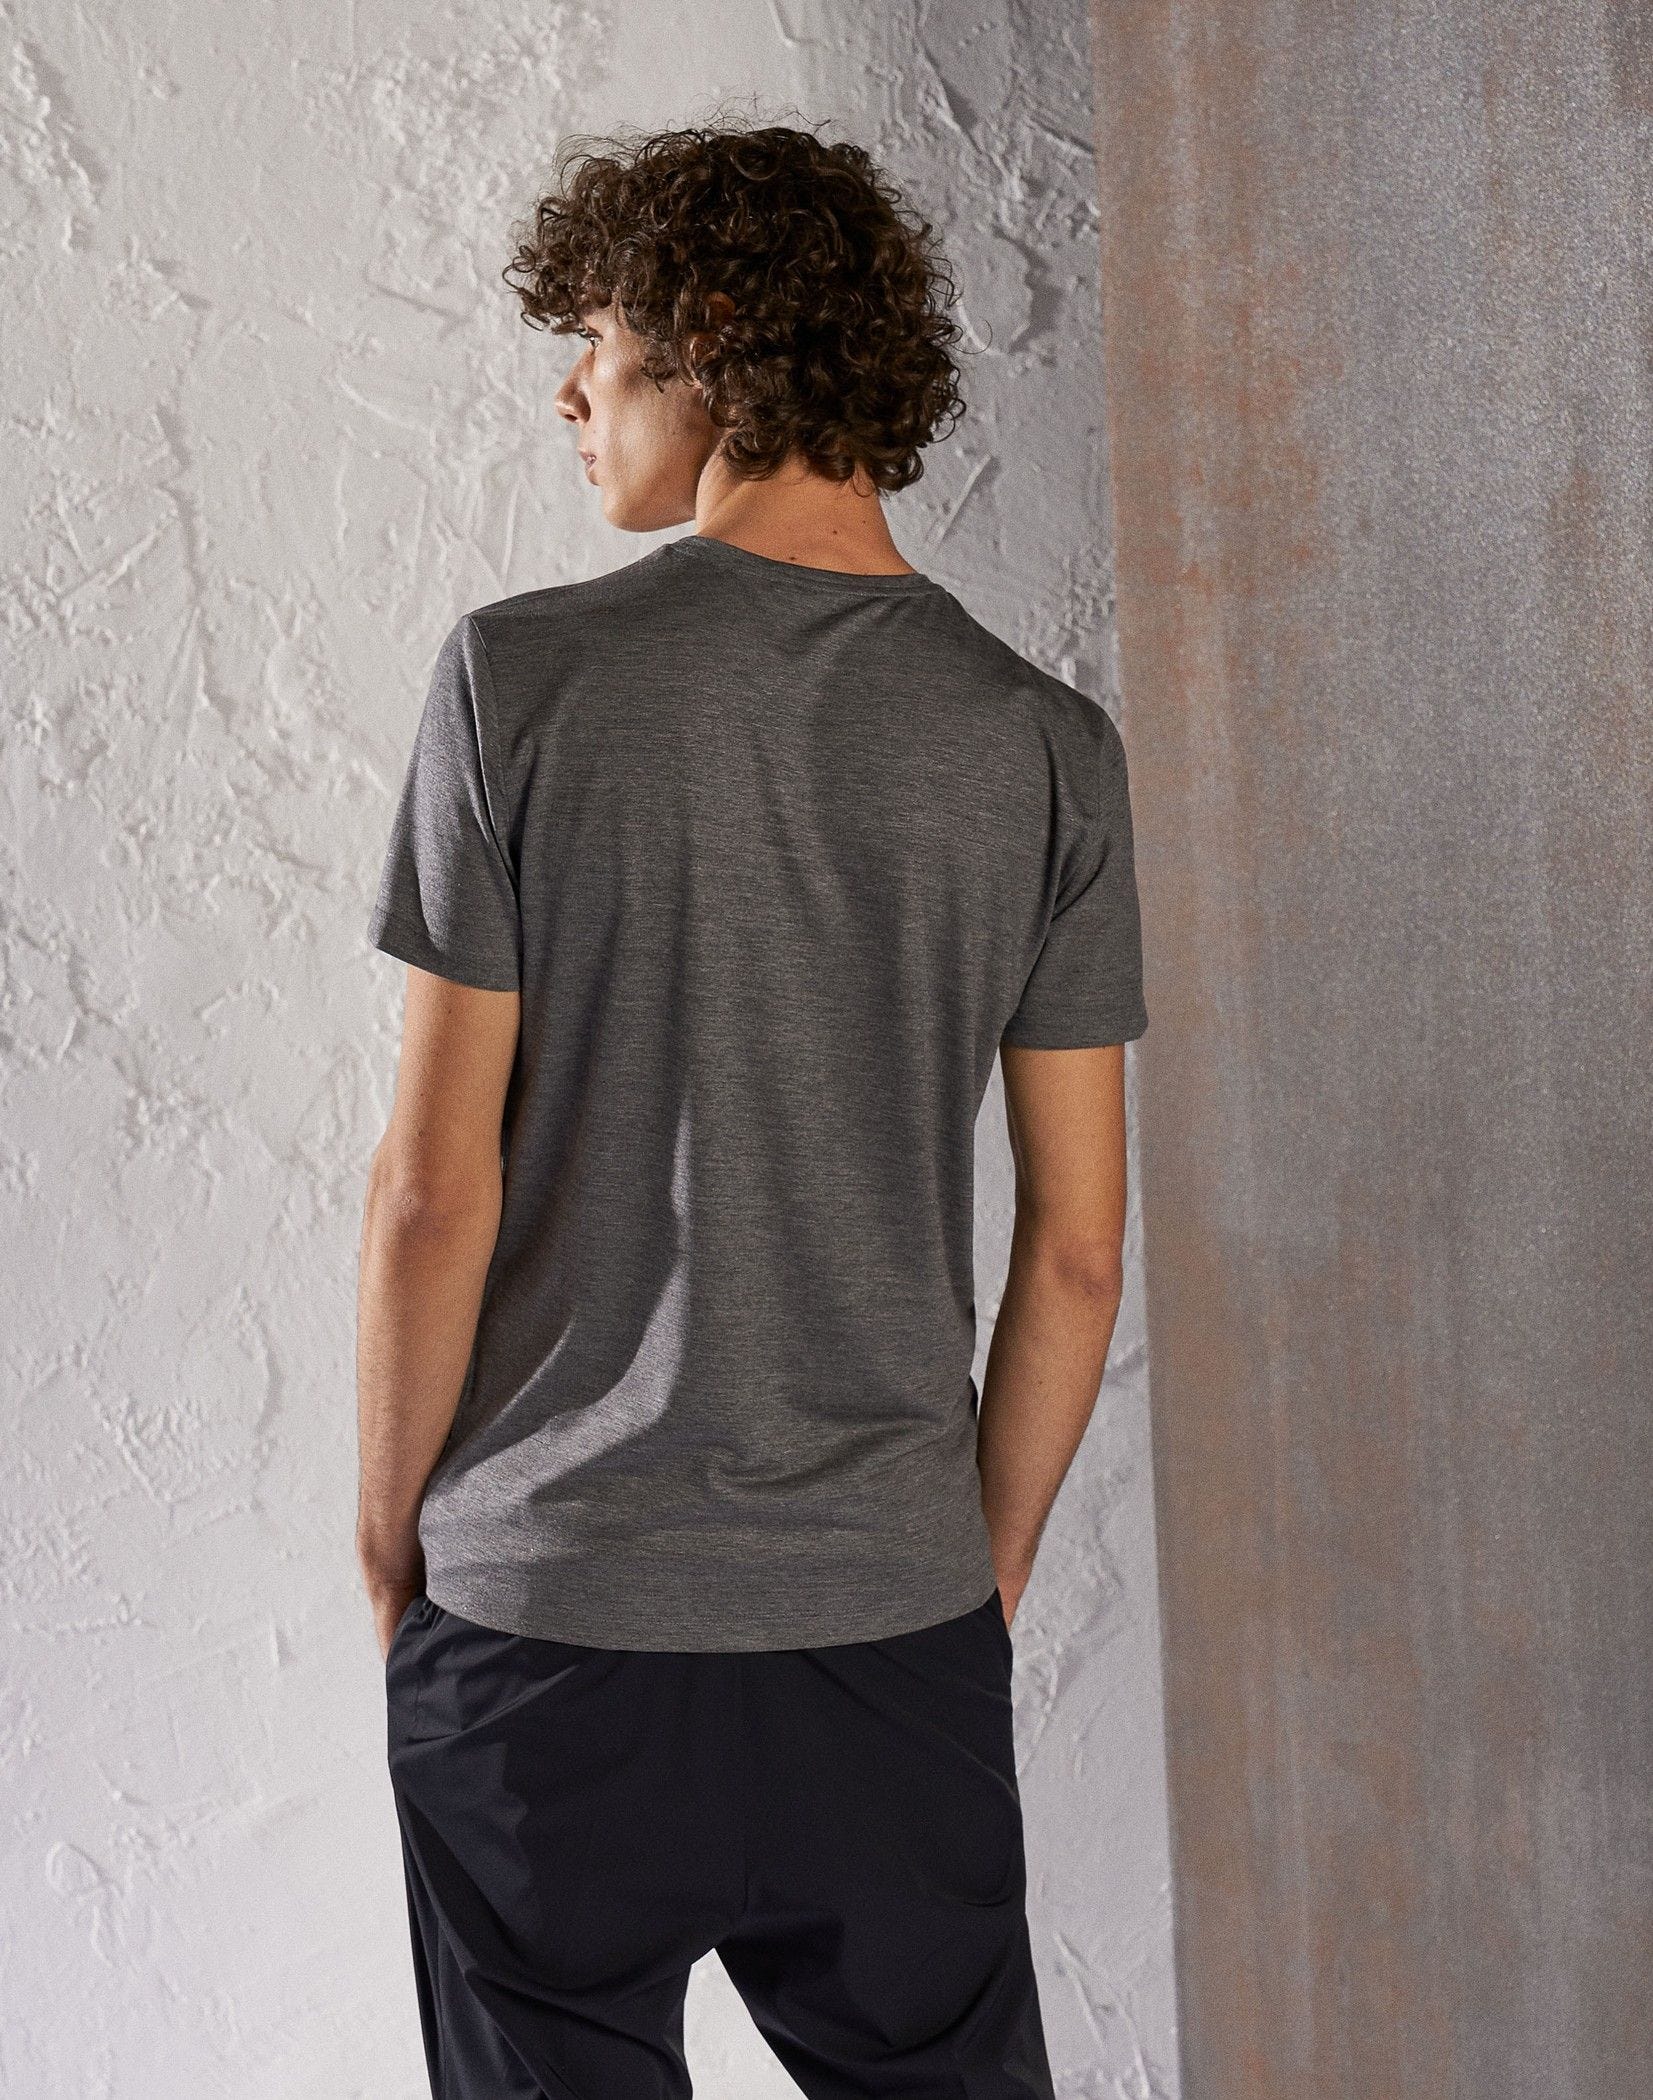 Organic cotton T-shirt - Easy Wear